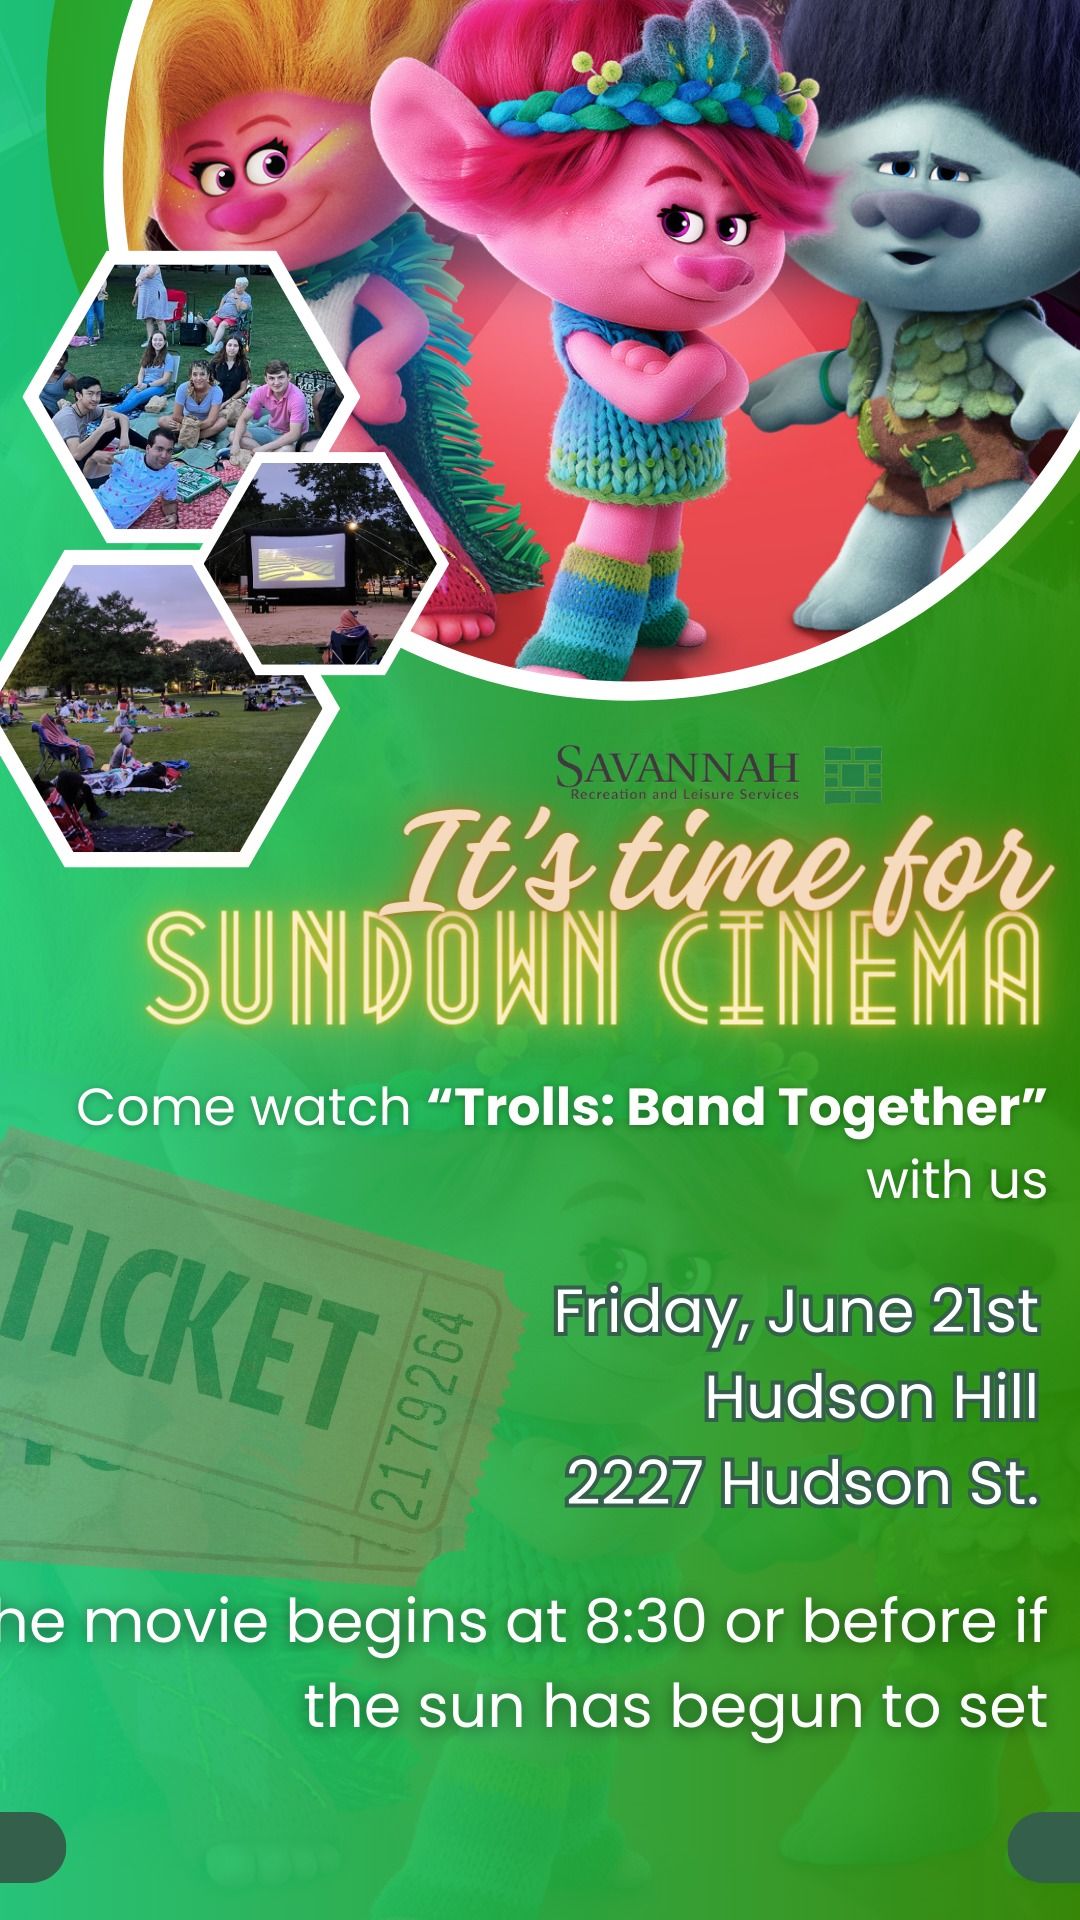 Sundown Cinema - "Trolls: Band Together"